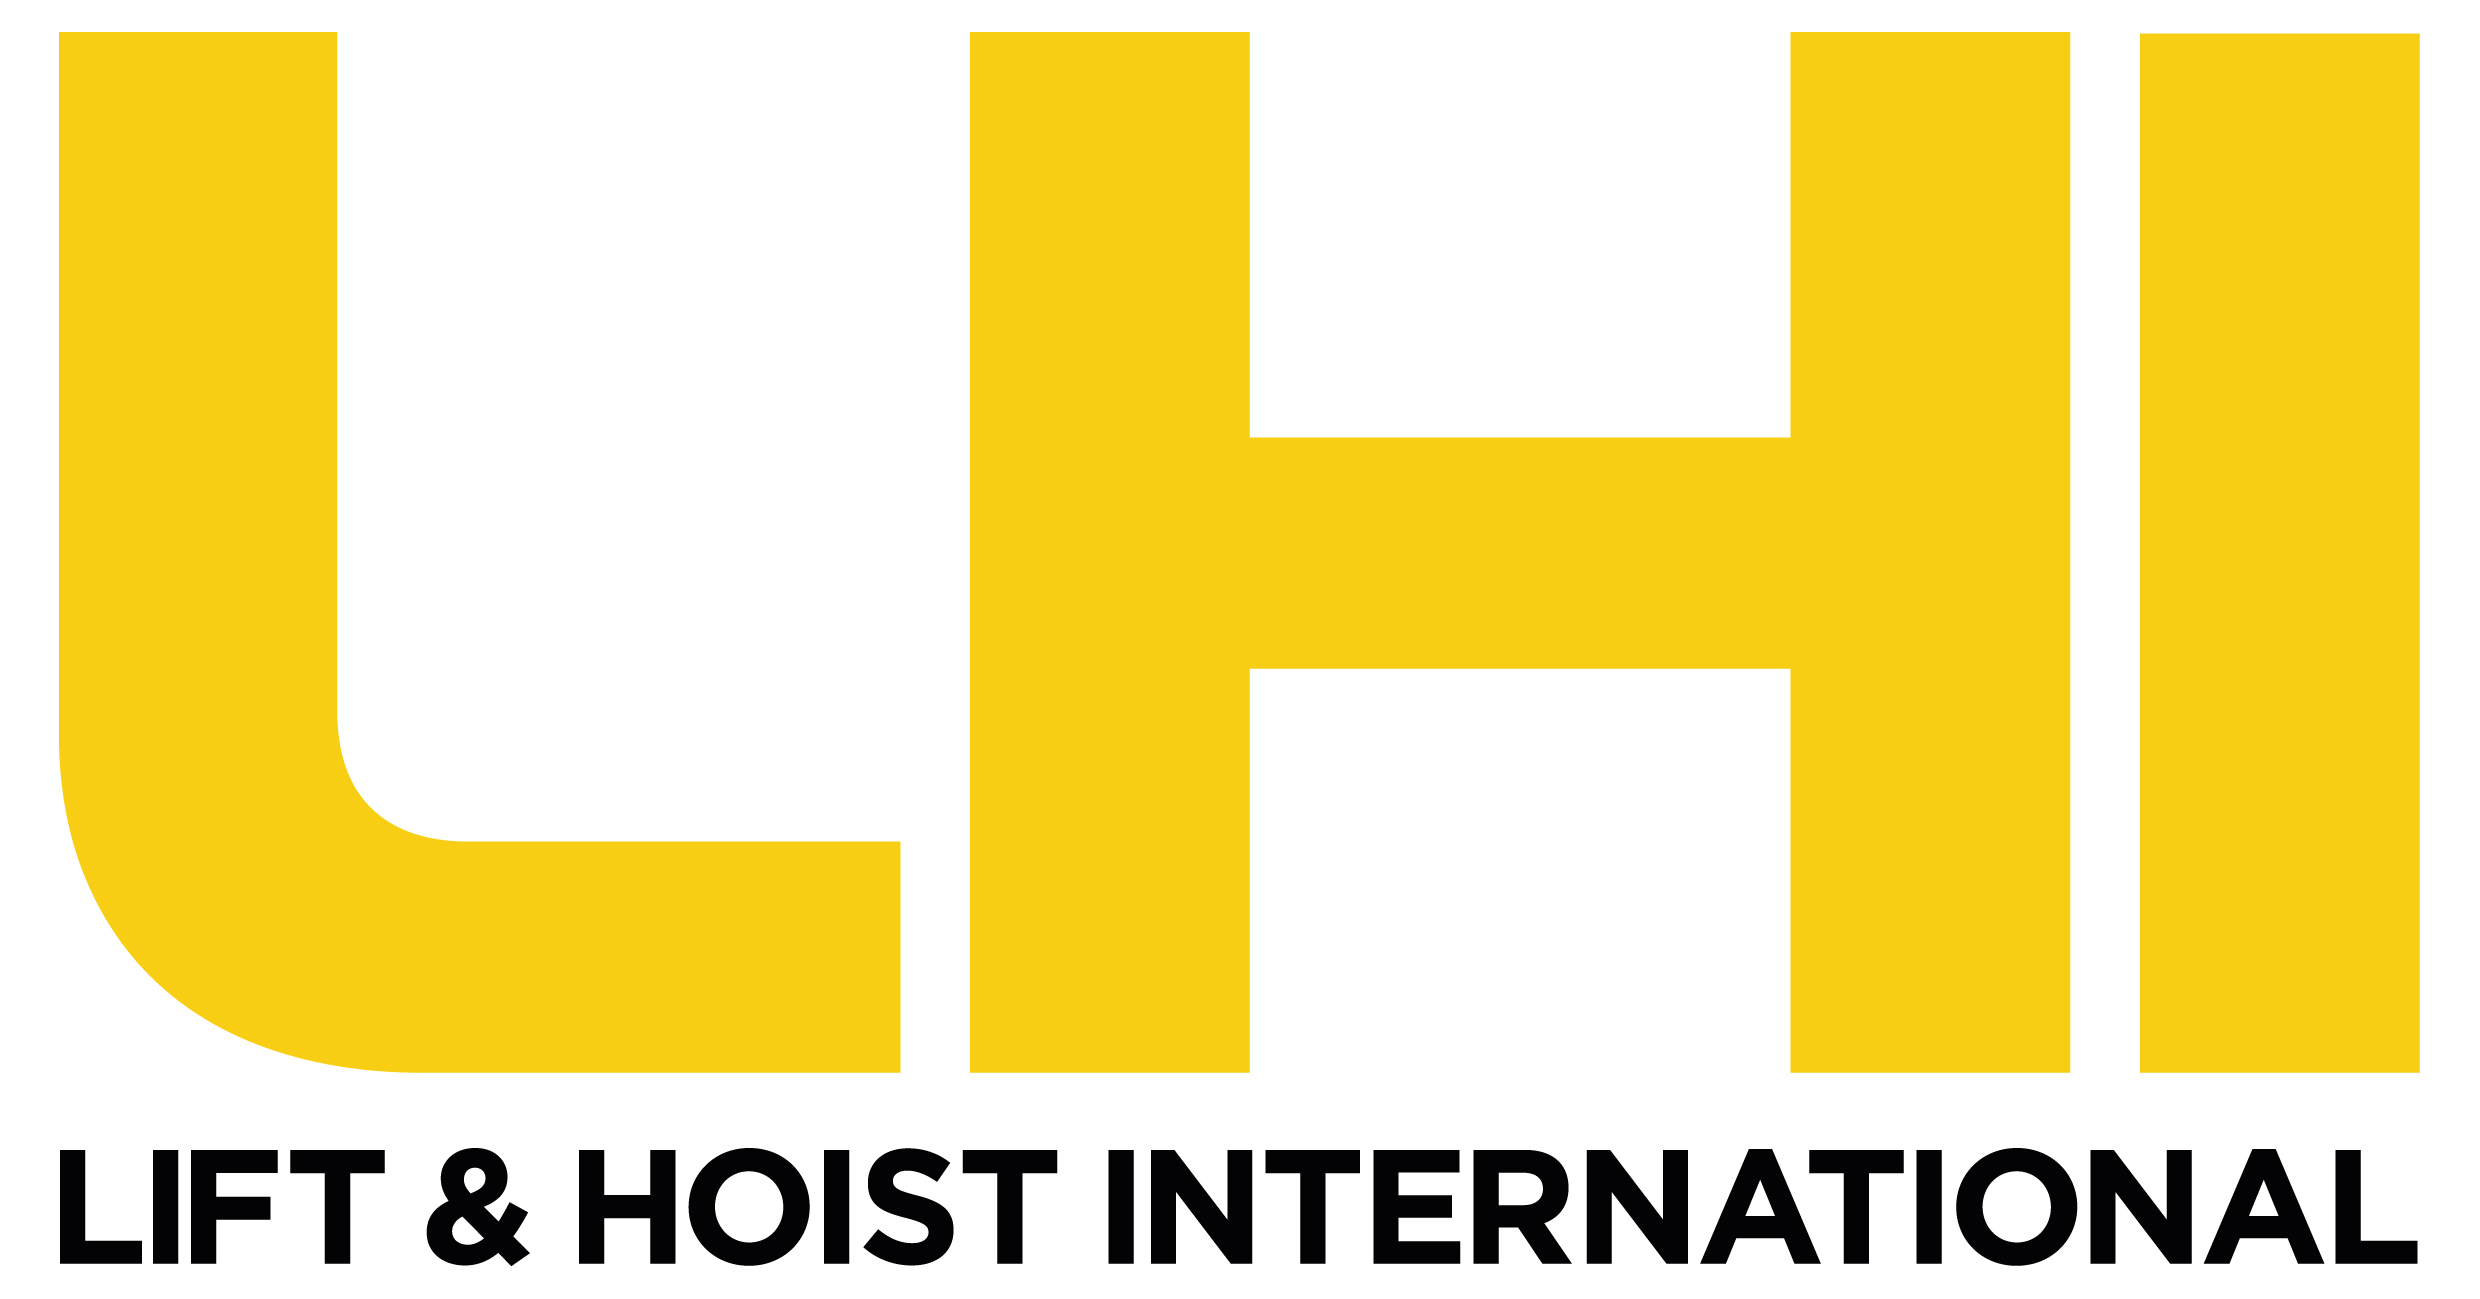 LHI - Lift & Hoist International